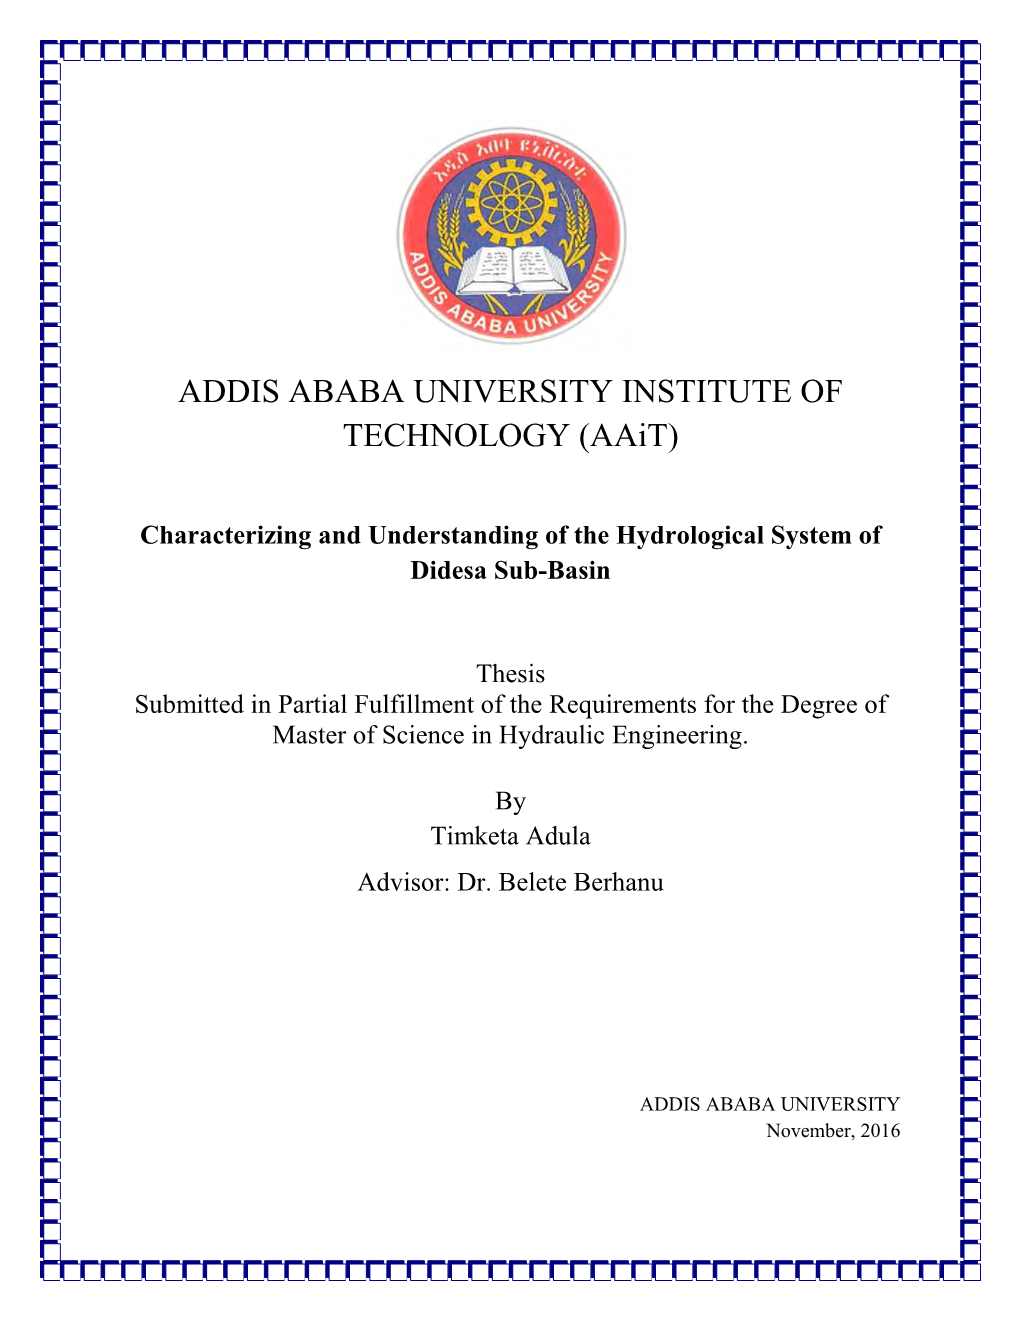 ADDIS ABABA UNIVERSITY INSTITUTE of TECHNOLOGY (Aait)